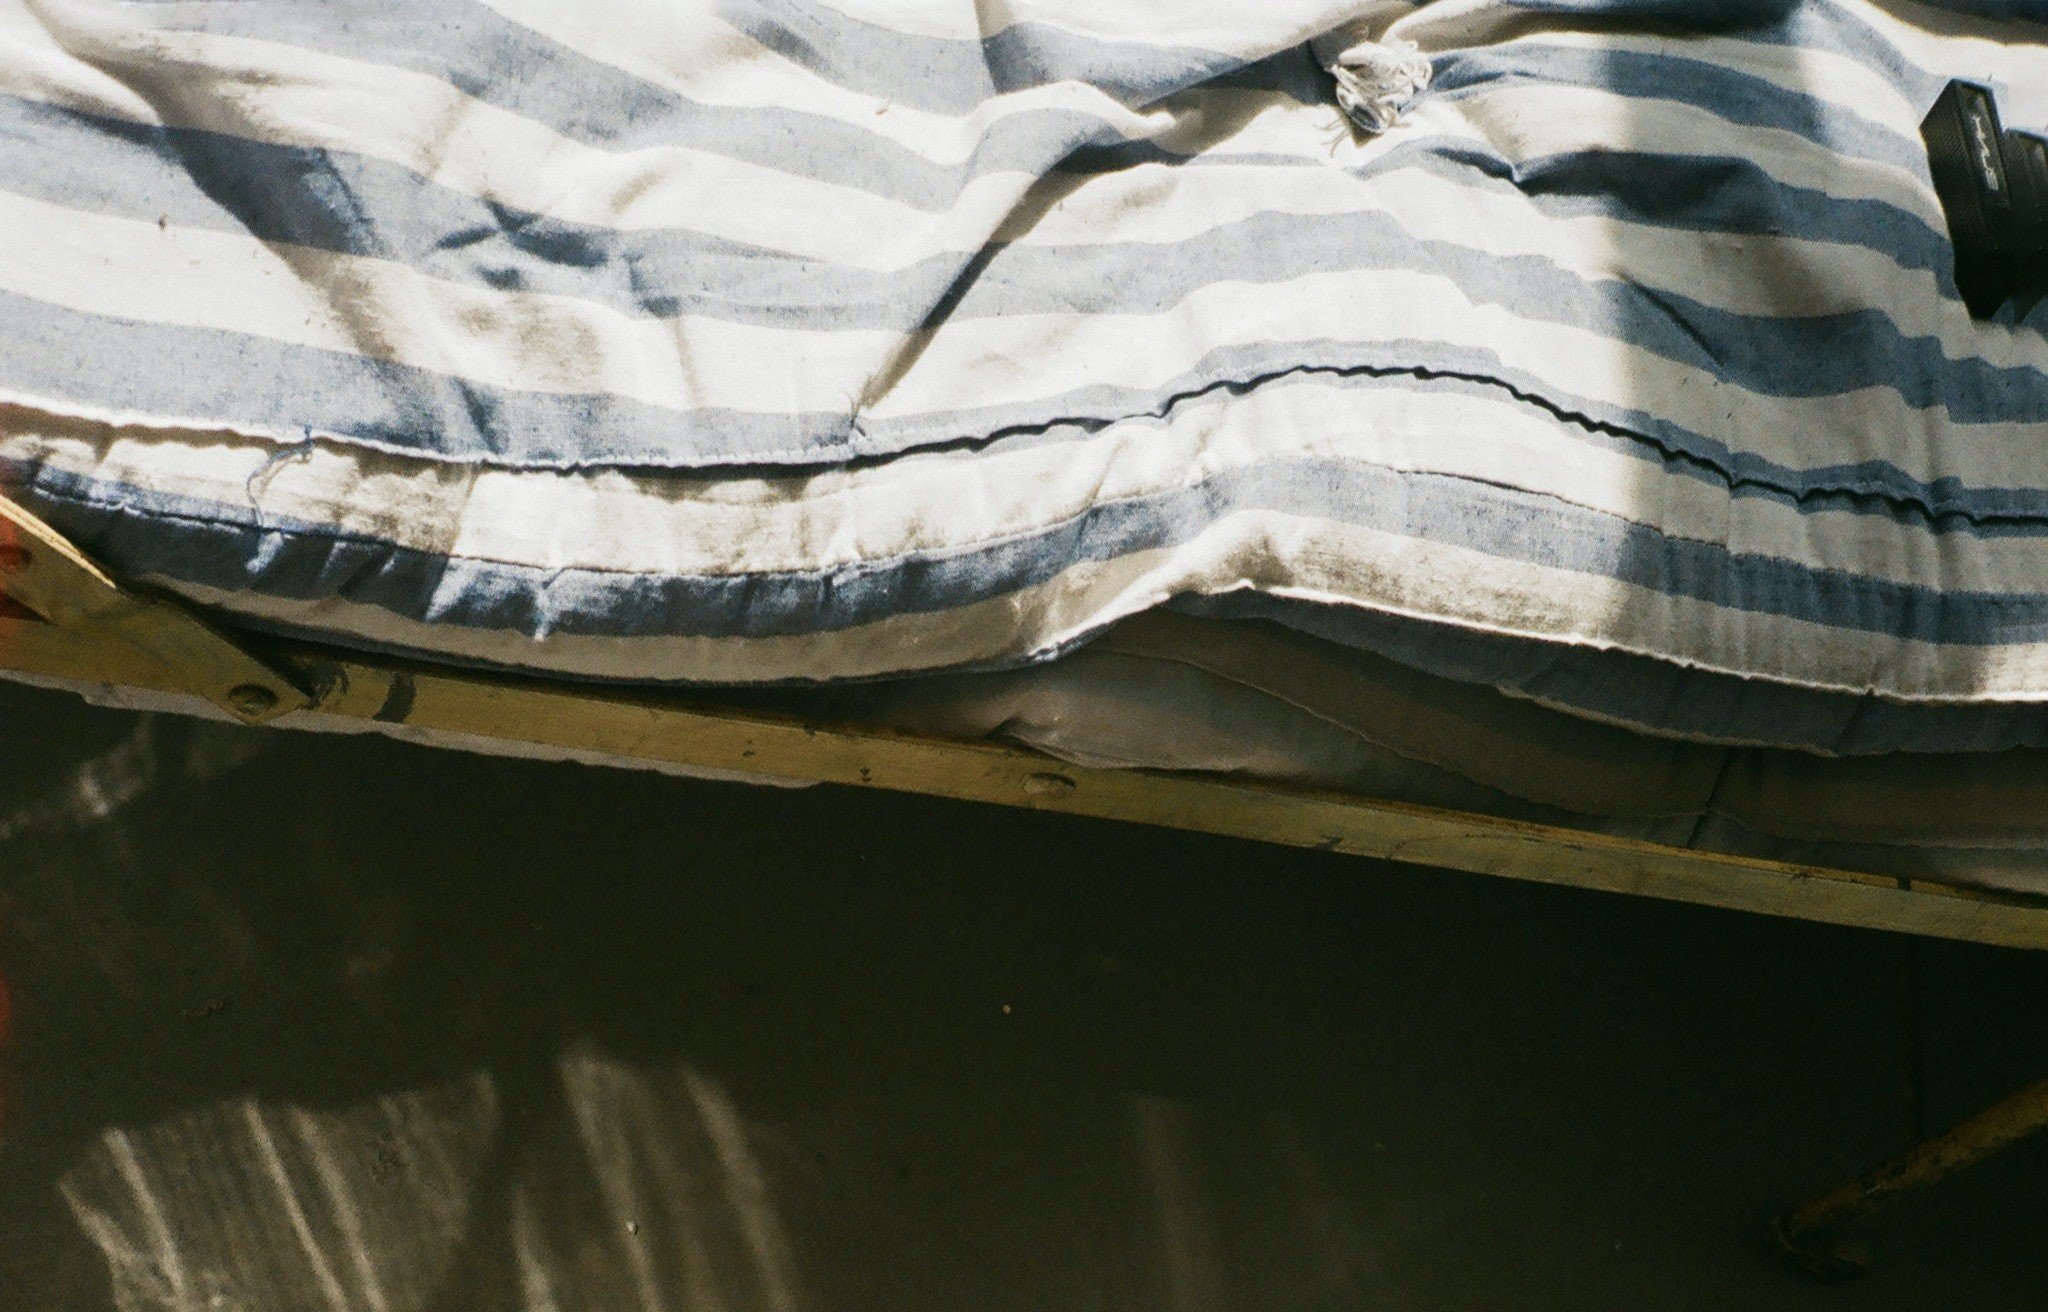 Melissa was sleeping on a mattress on the kitchen floor. | Source: Unsplash